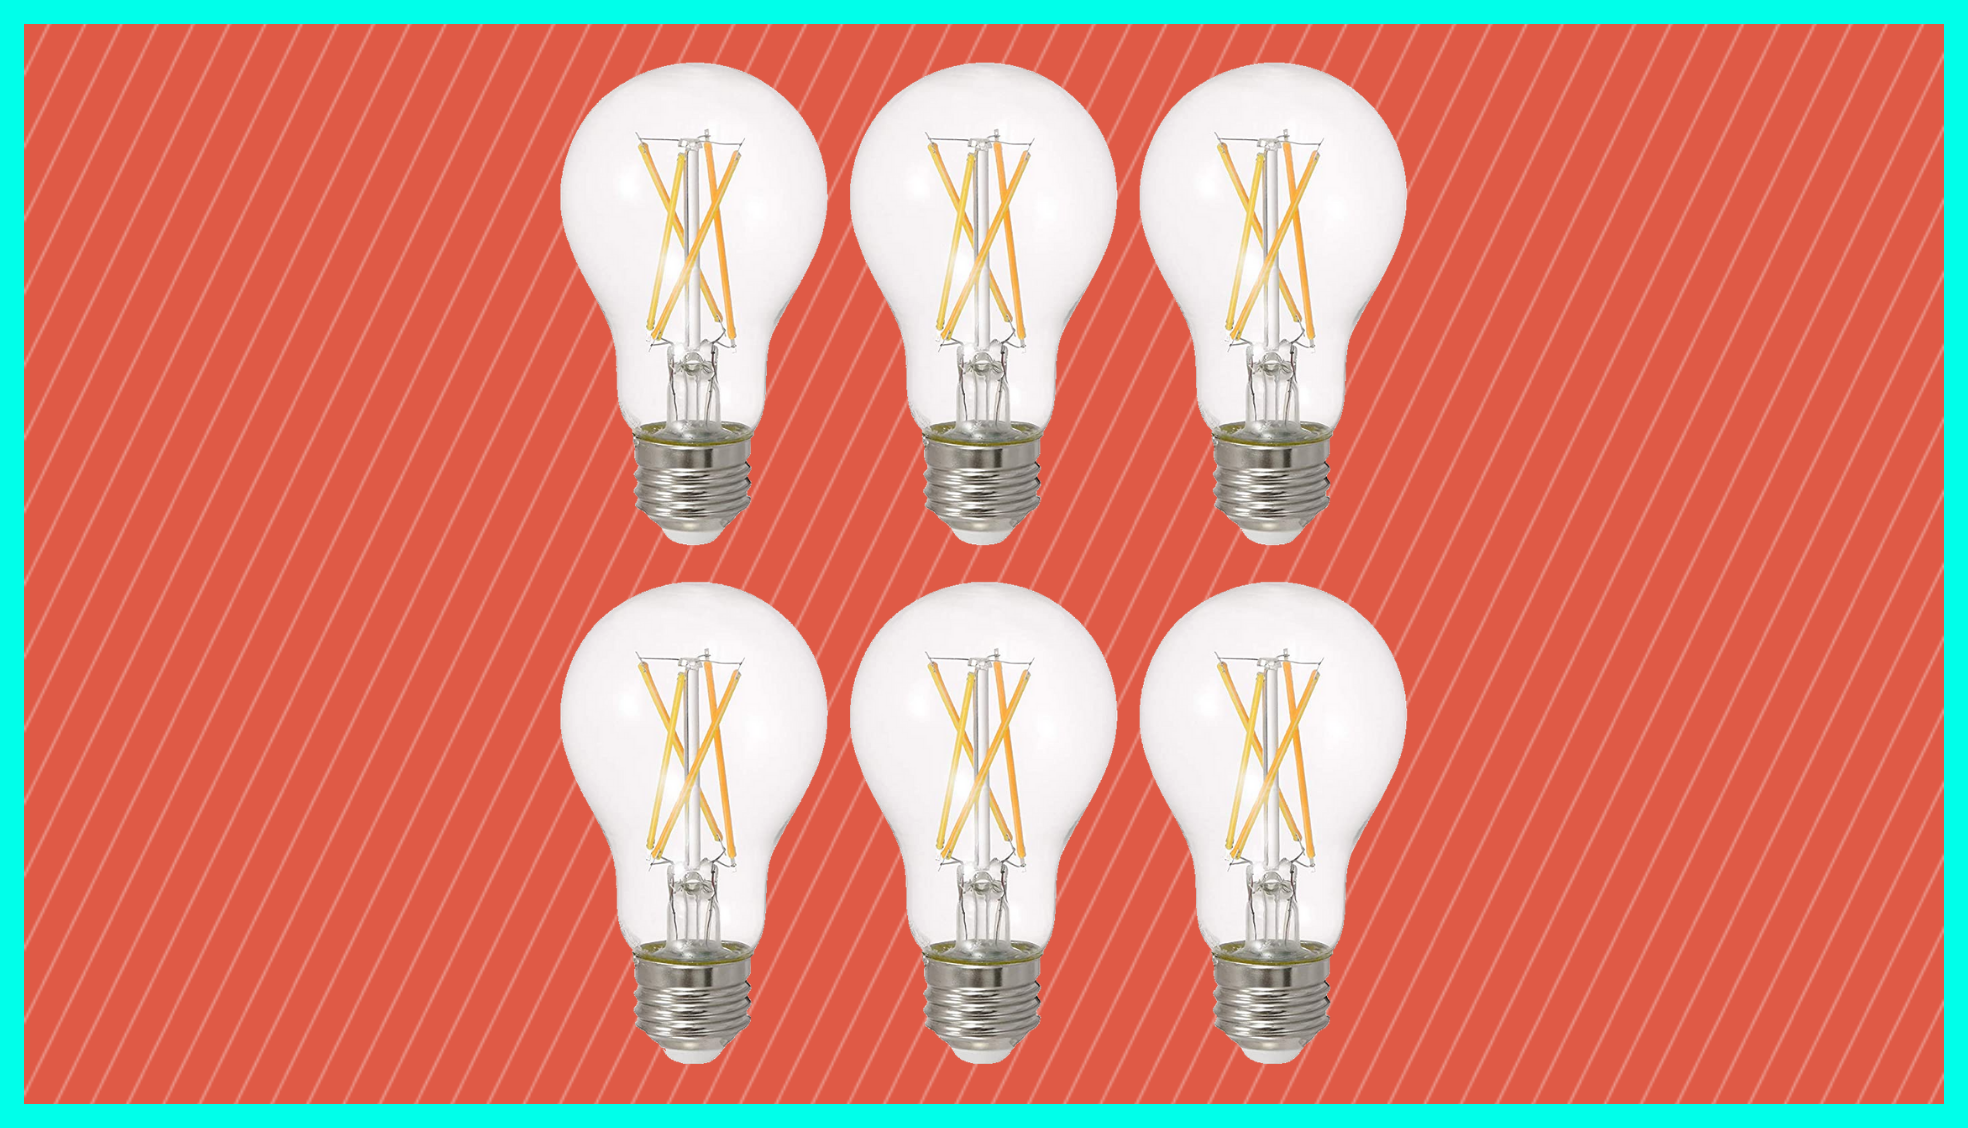 Sylvania Smart Light Bulbs and Smart Plugs are on sale at Amazon